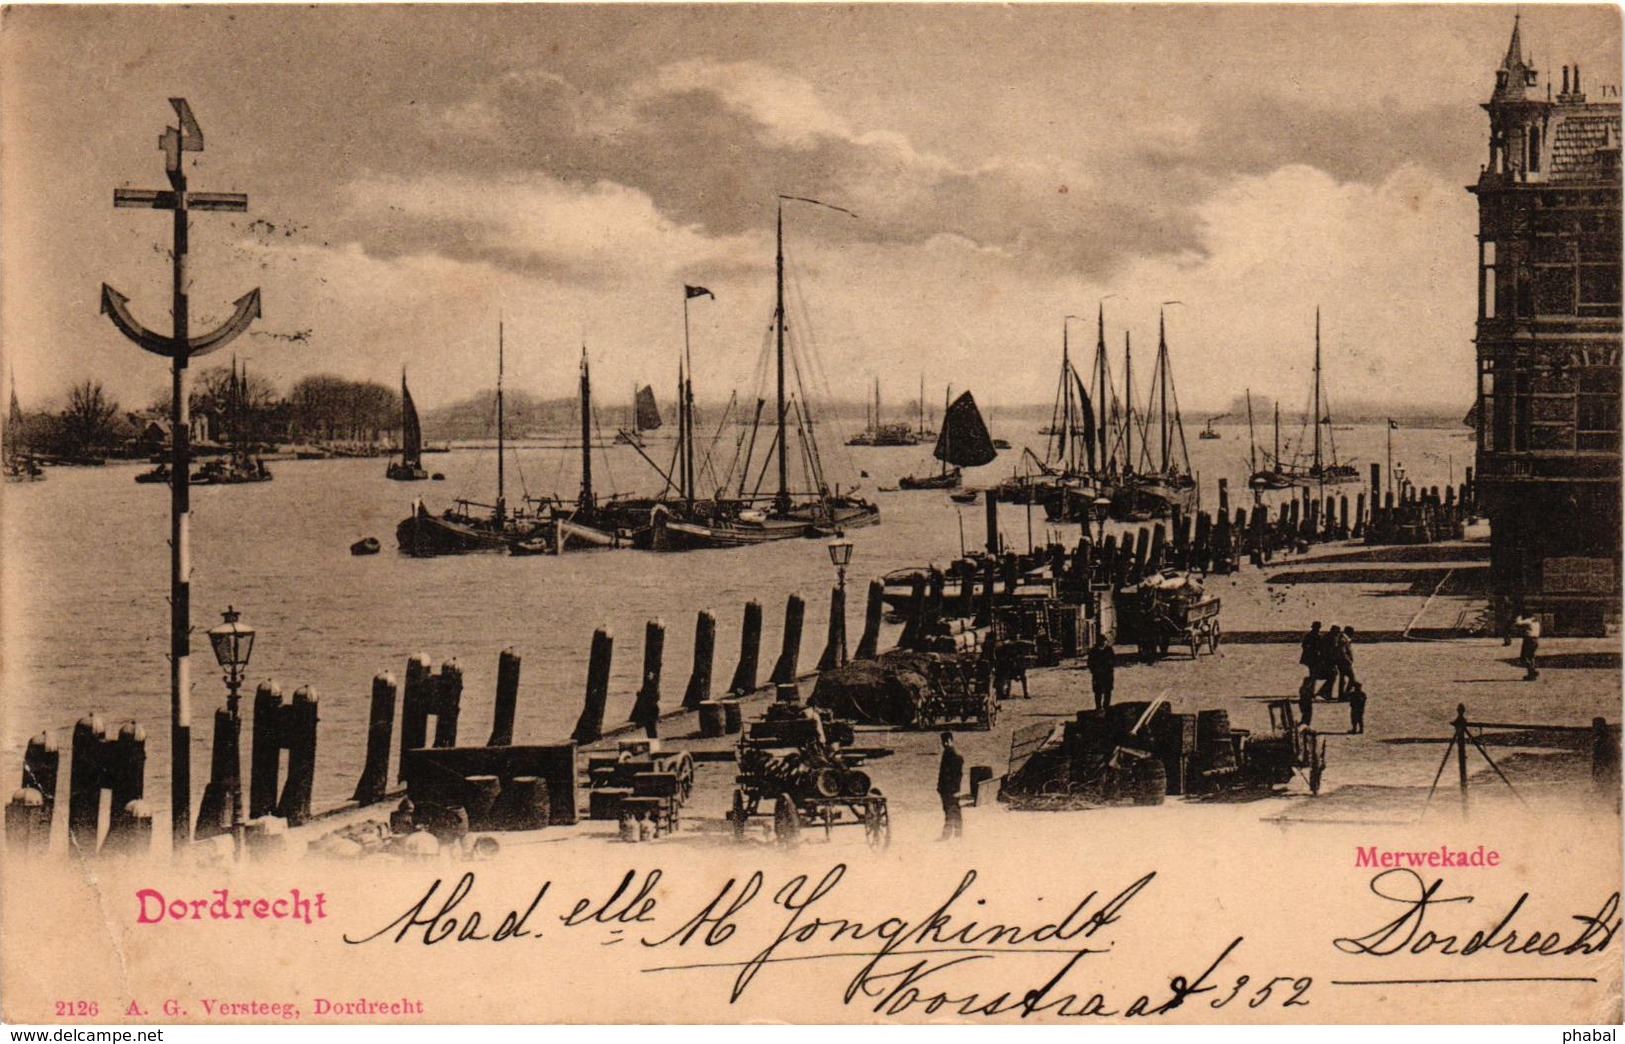 The Netherlands, Dordrecht, Merwekade, Old Postcard 1900 - Dordrecht